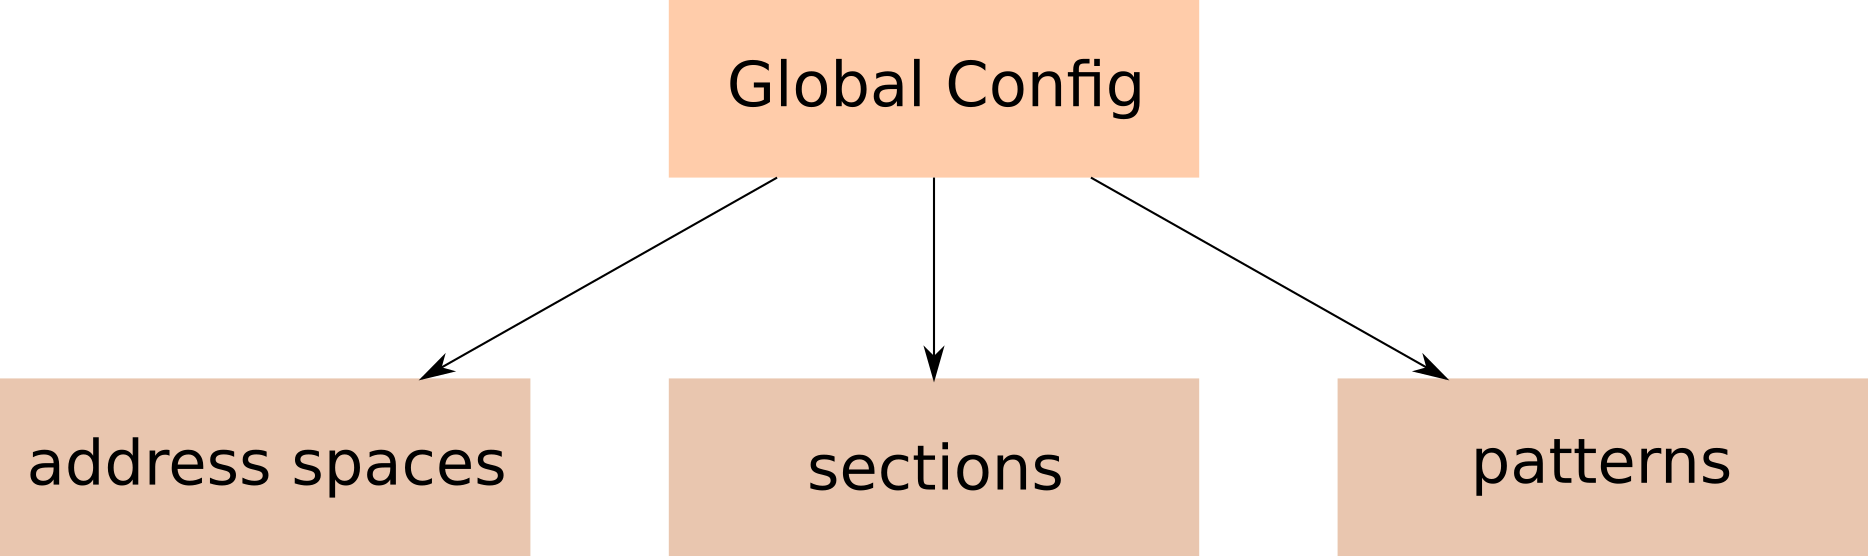 globalConfigScheme.png